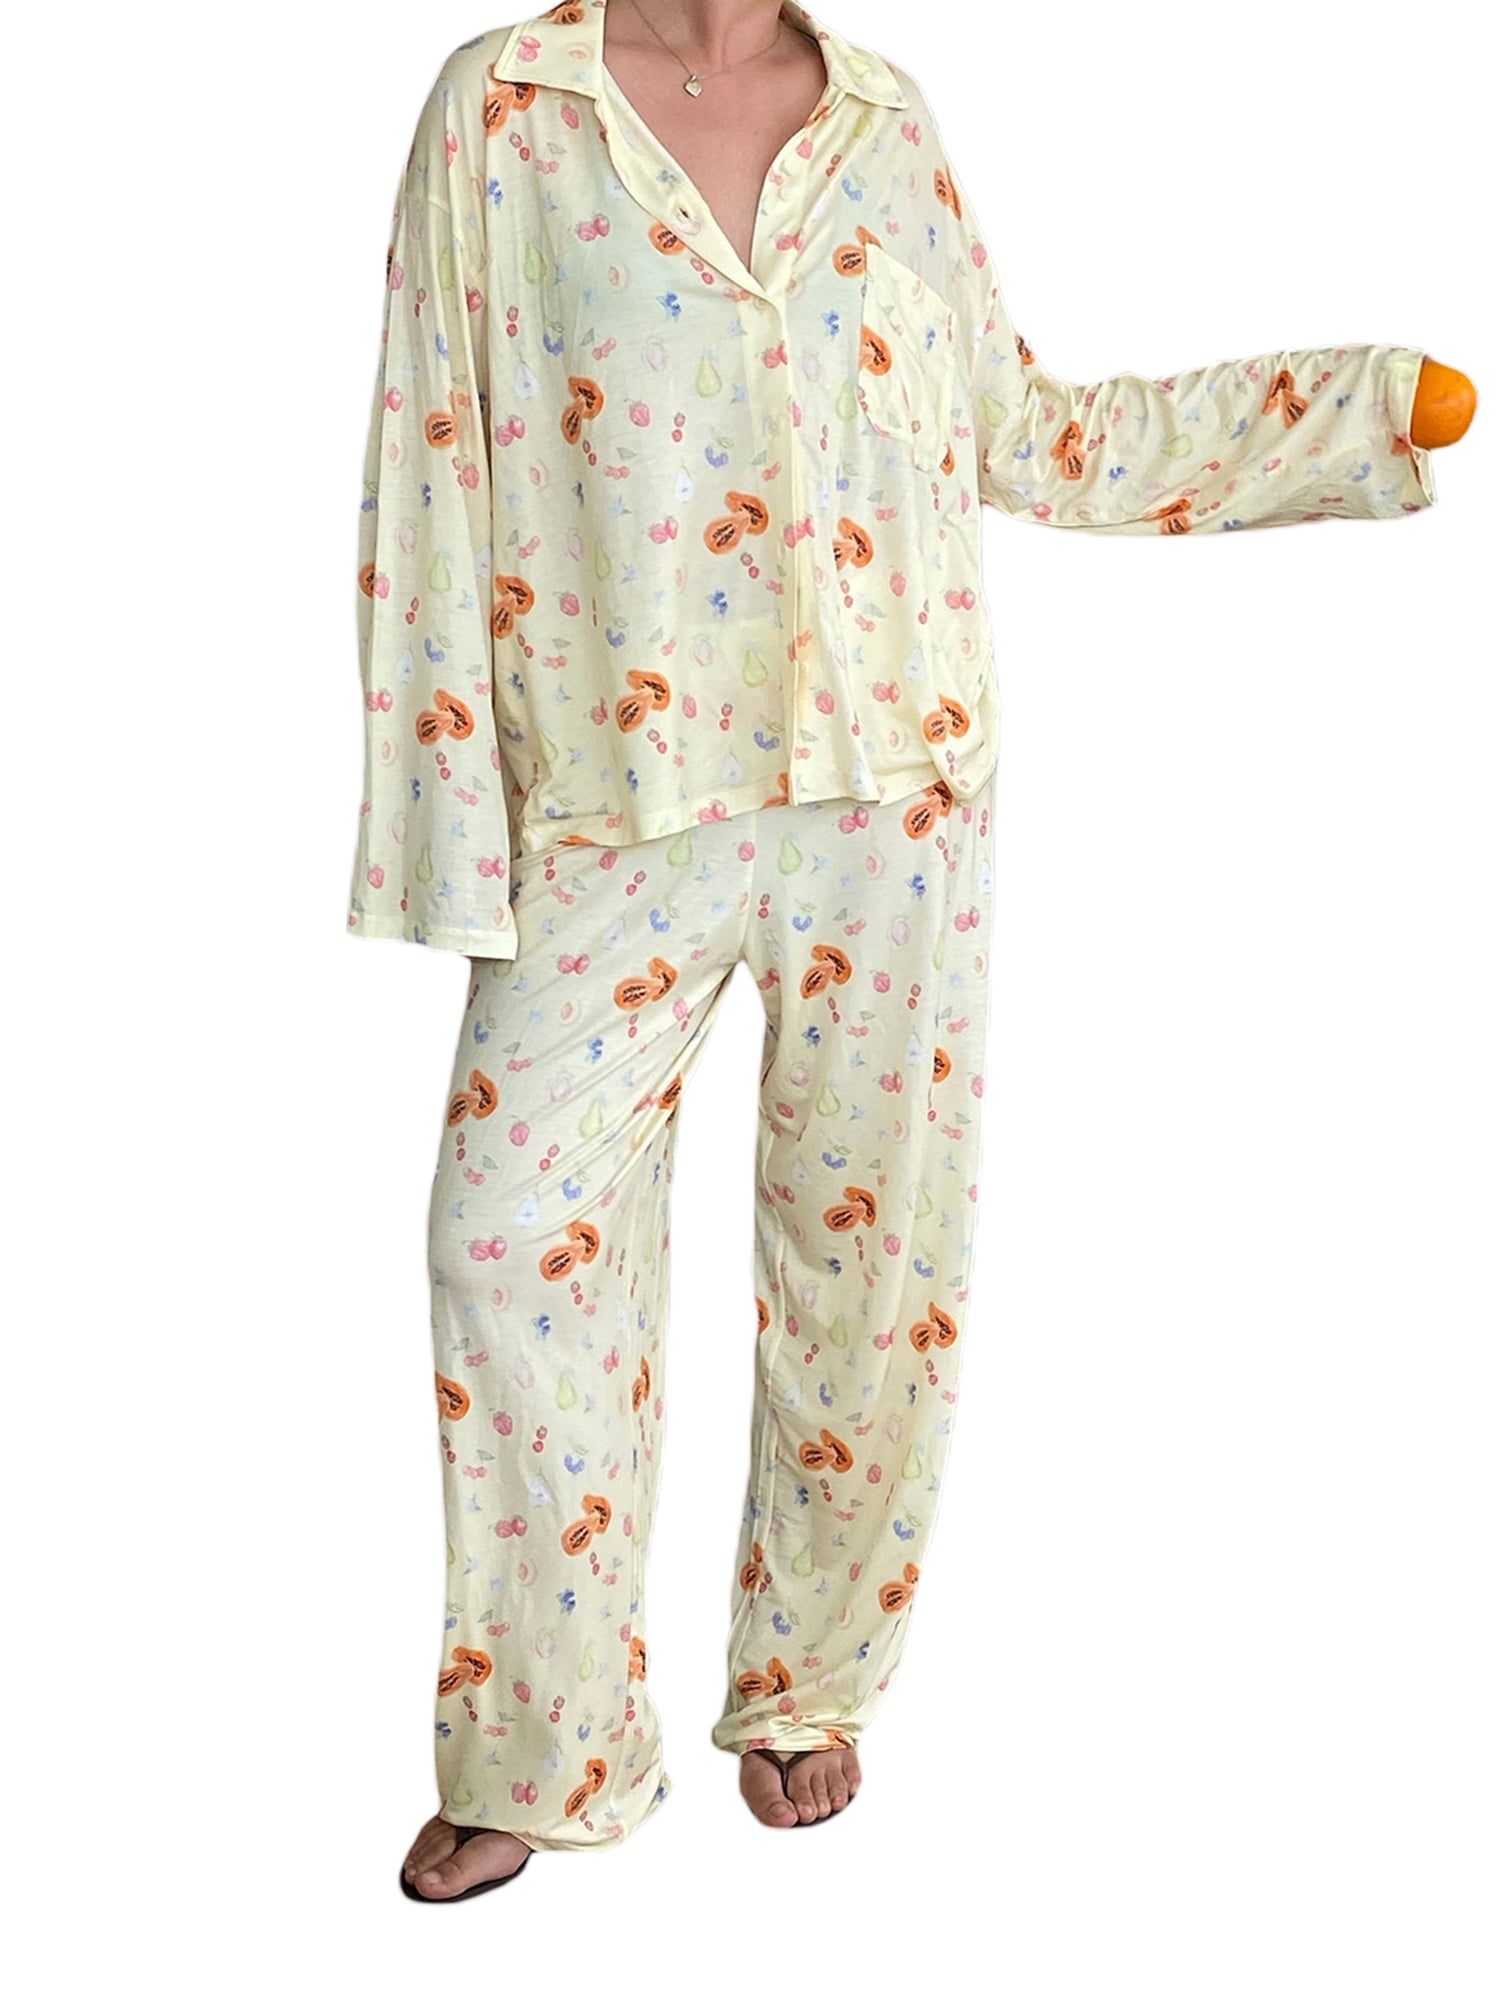 Matching Women's NYC Skyline Pajama Set, Created for Macy's